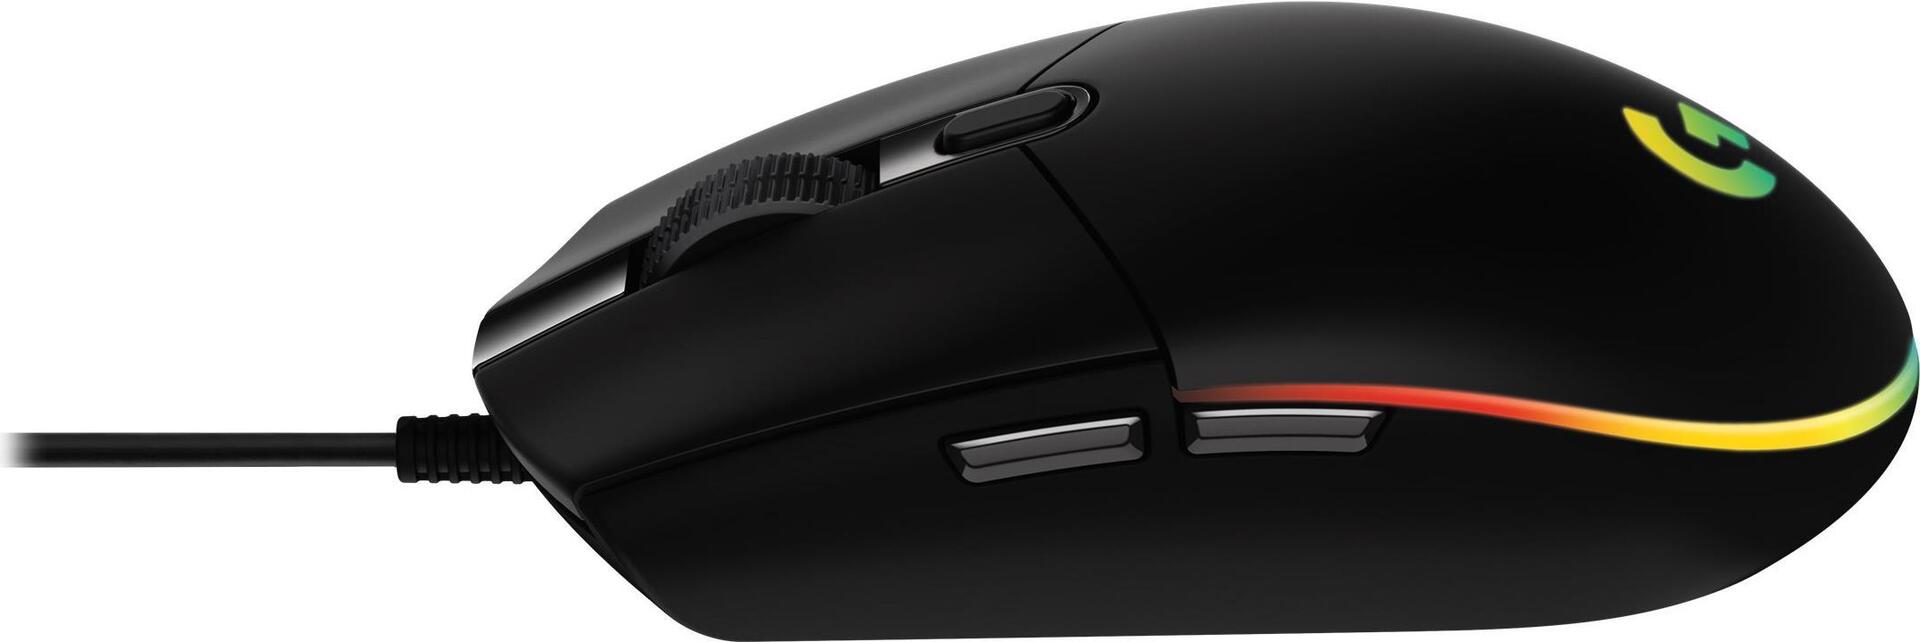 Logitech Gaming Mouse G203 LIGHTSYNC (910-005796)